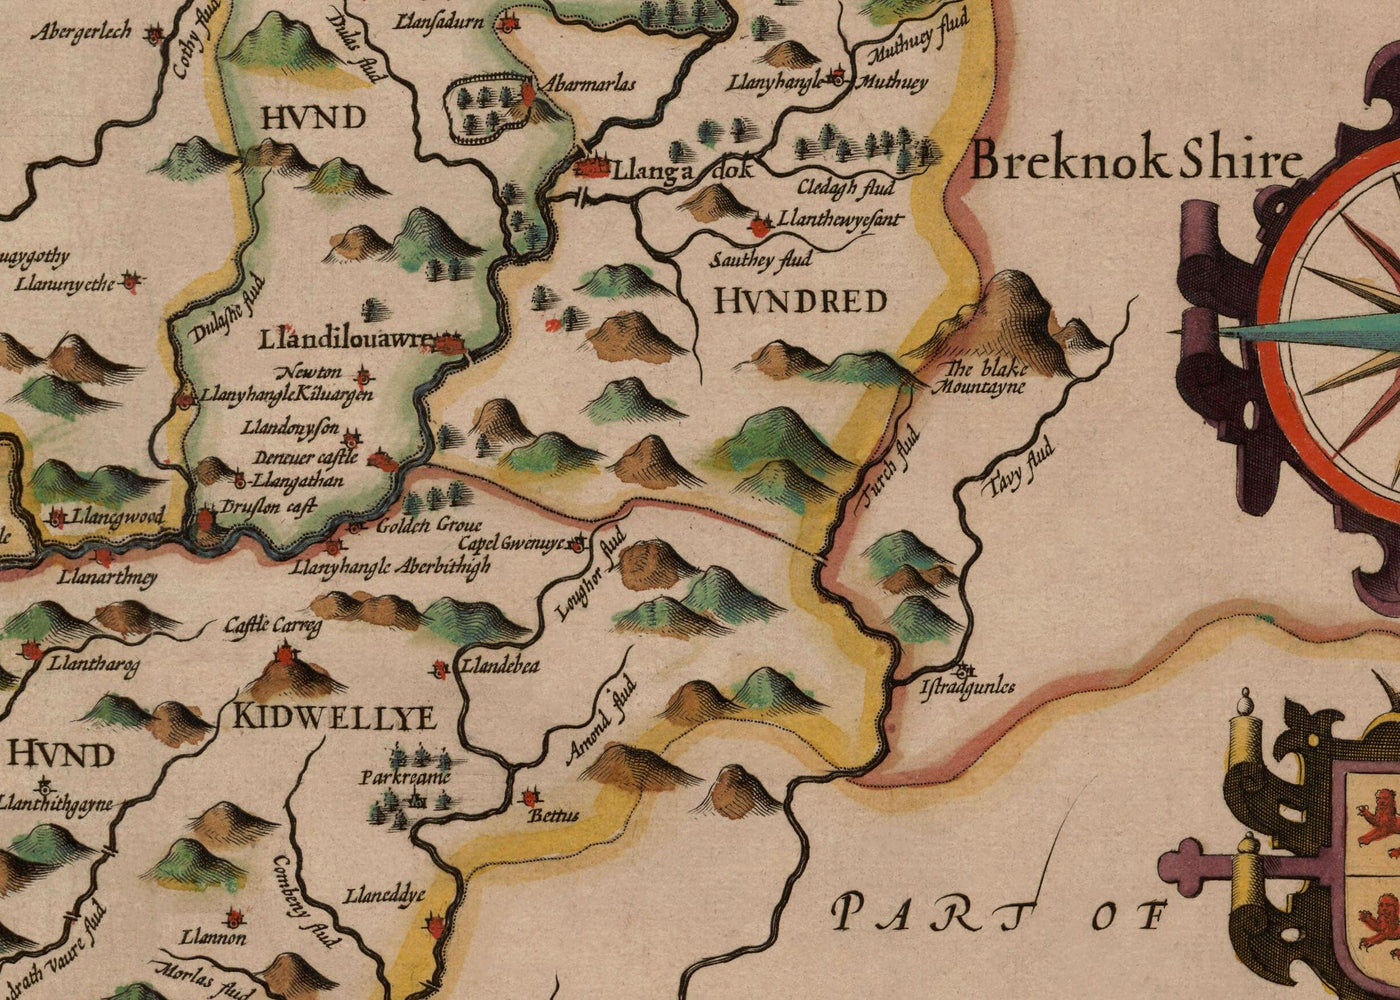 Old Map of Carmarthenshire Wales, 1611 by John Speed - Carmarthen, Llanelli, Llandovery